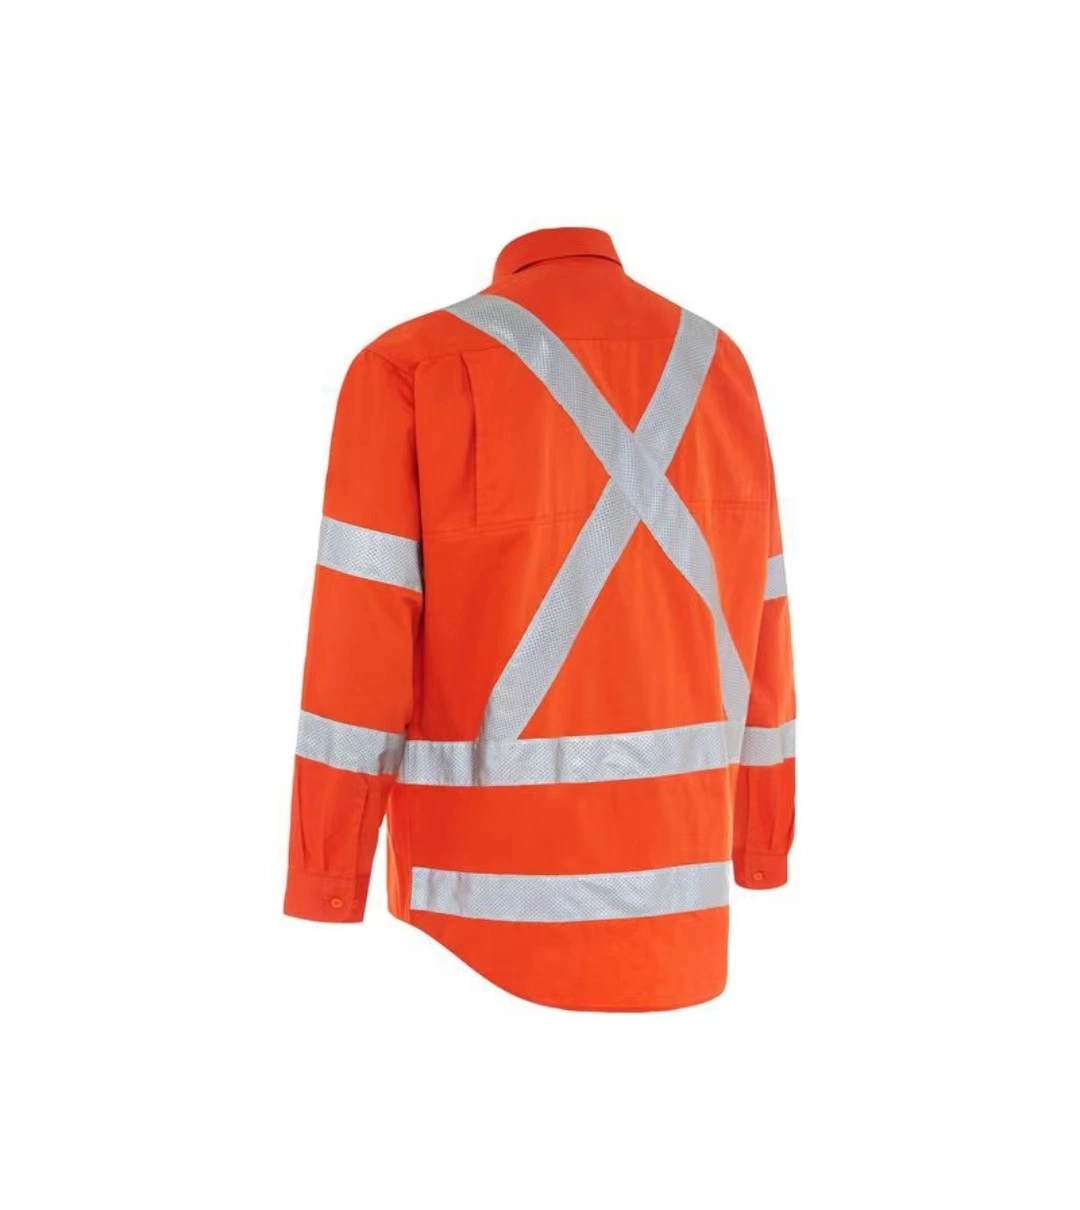 Custom Garment Hi-Vis Safety Work Clothes Reflective Uniform Shirt Protective Workwear